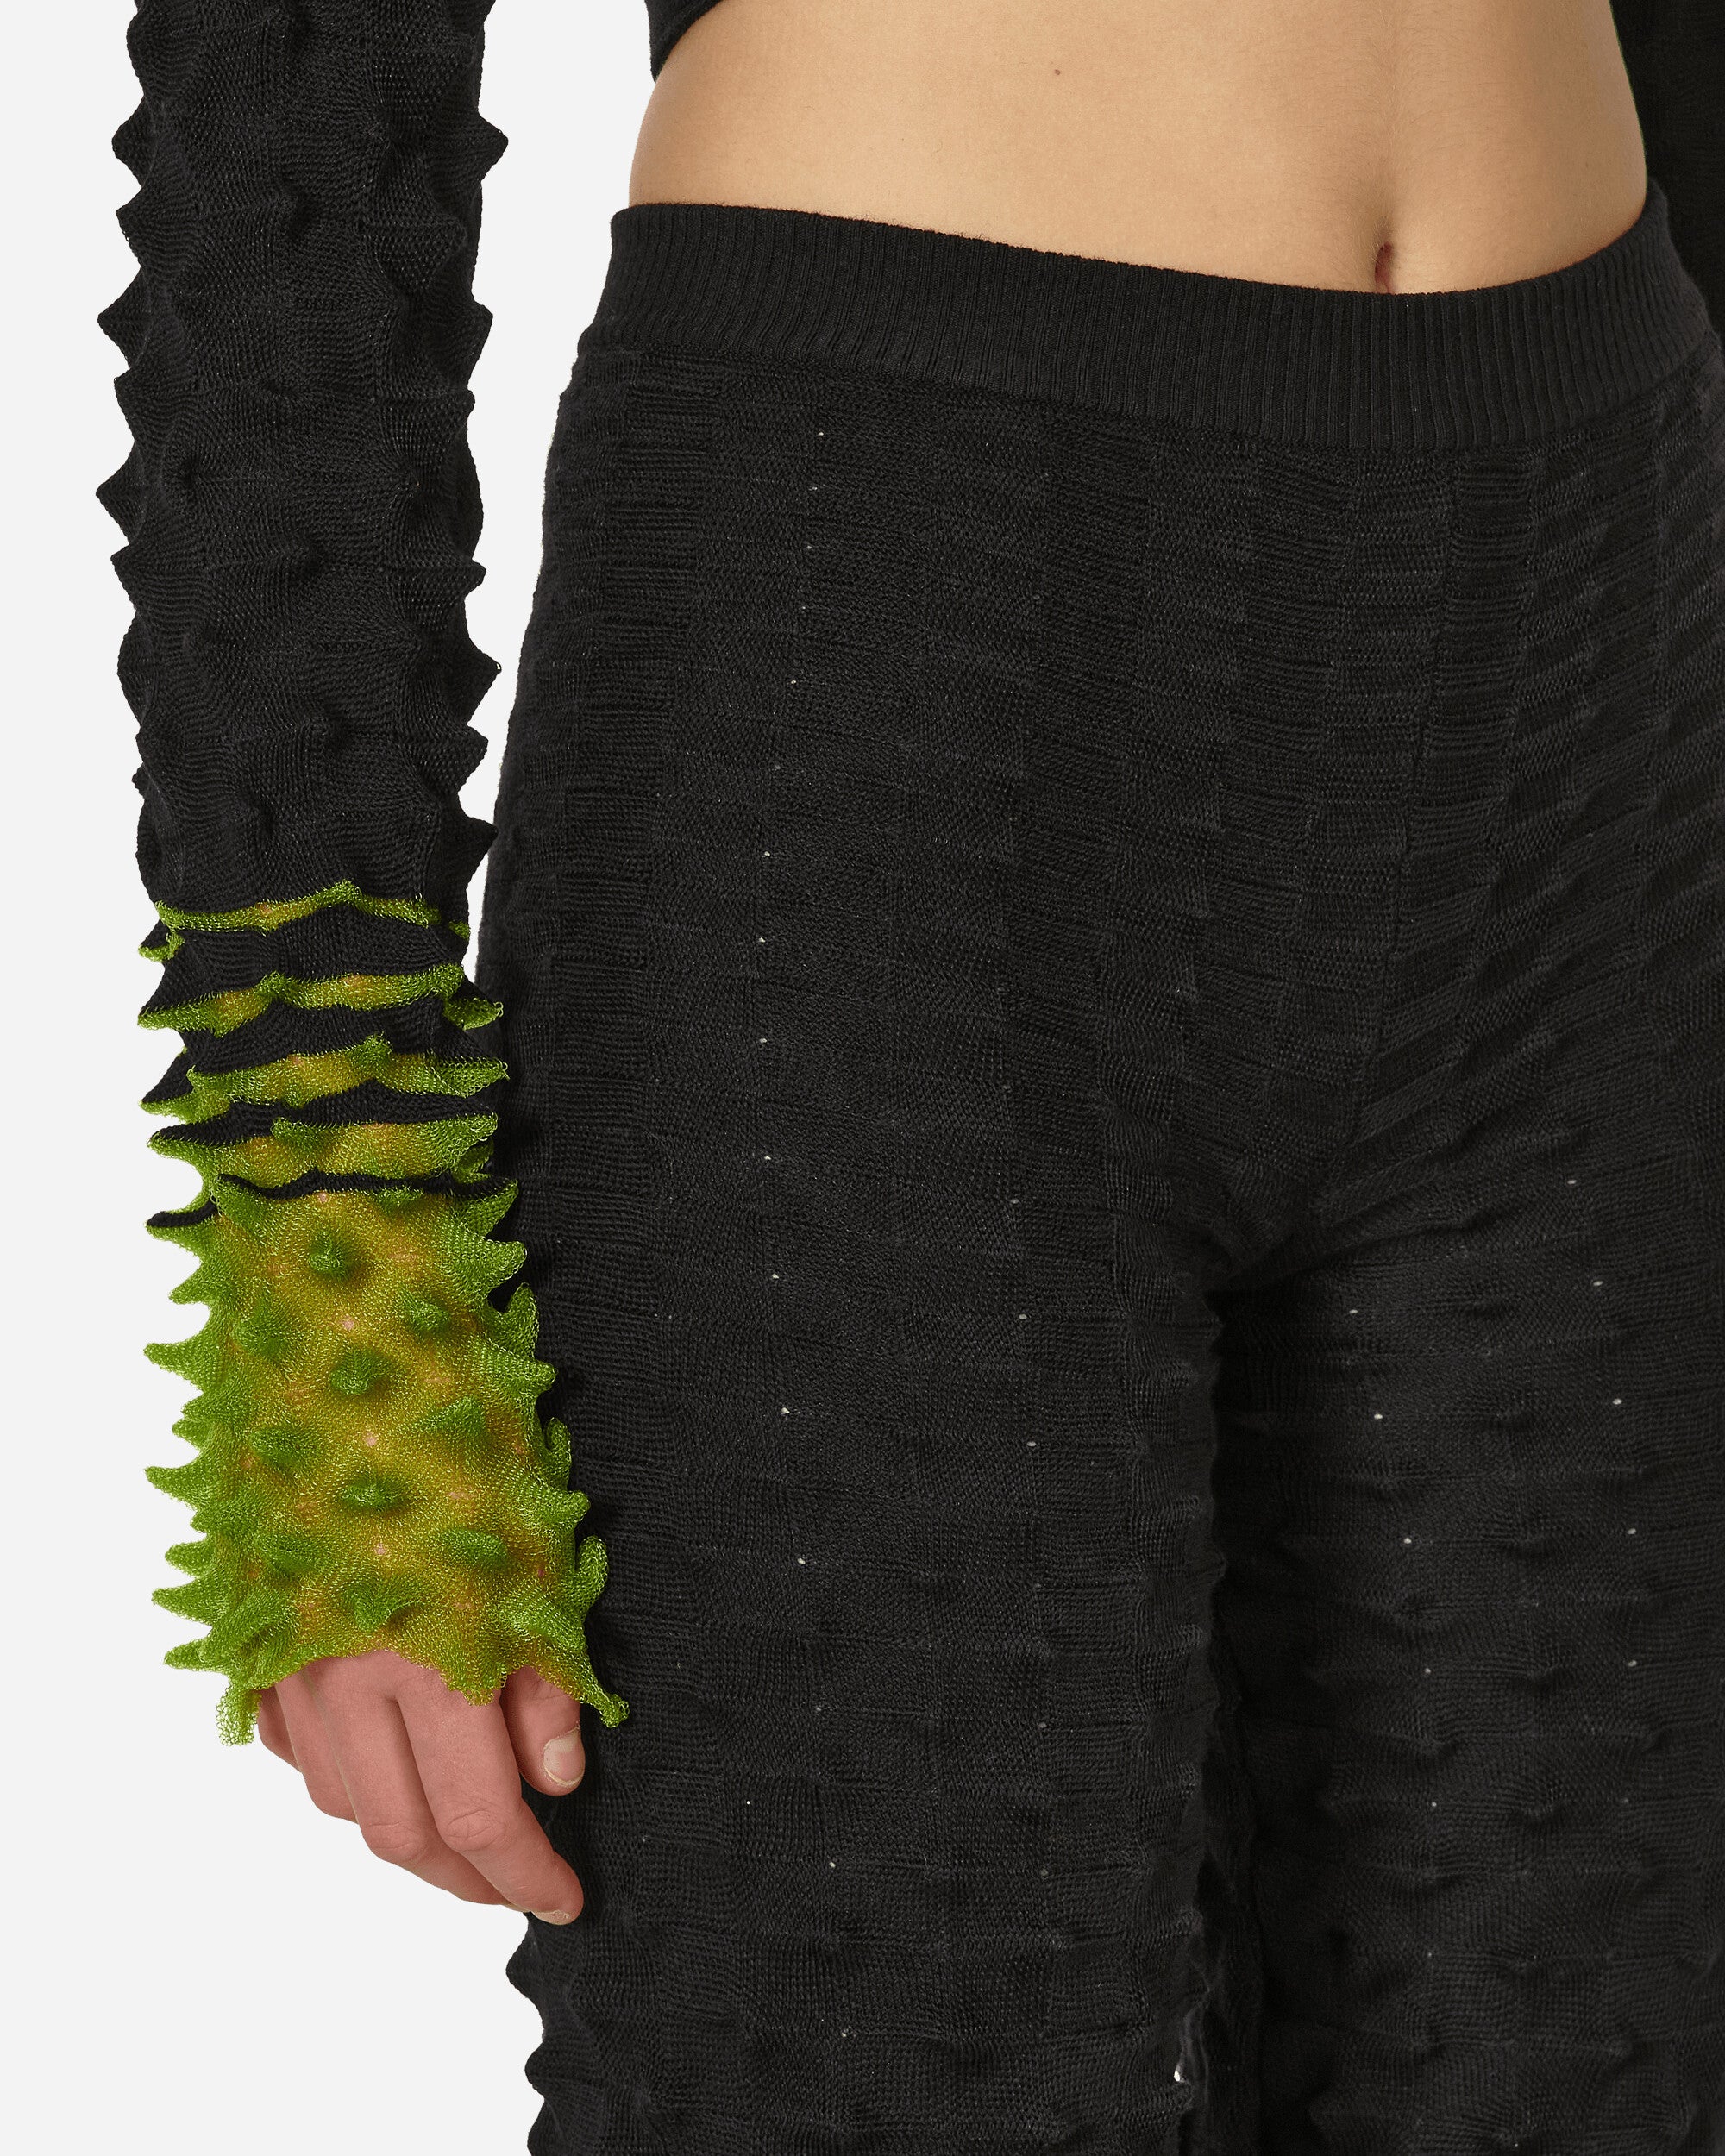 Chet Lo Wmns Spiky Ballet Top Black/Green Knitwears Cardigans FW23CL11 1